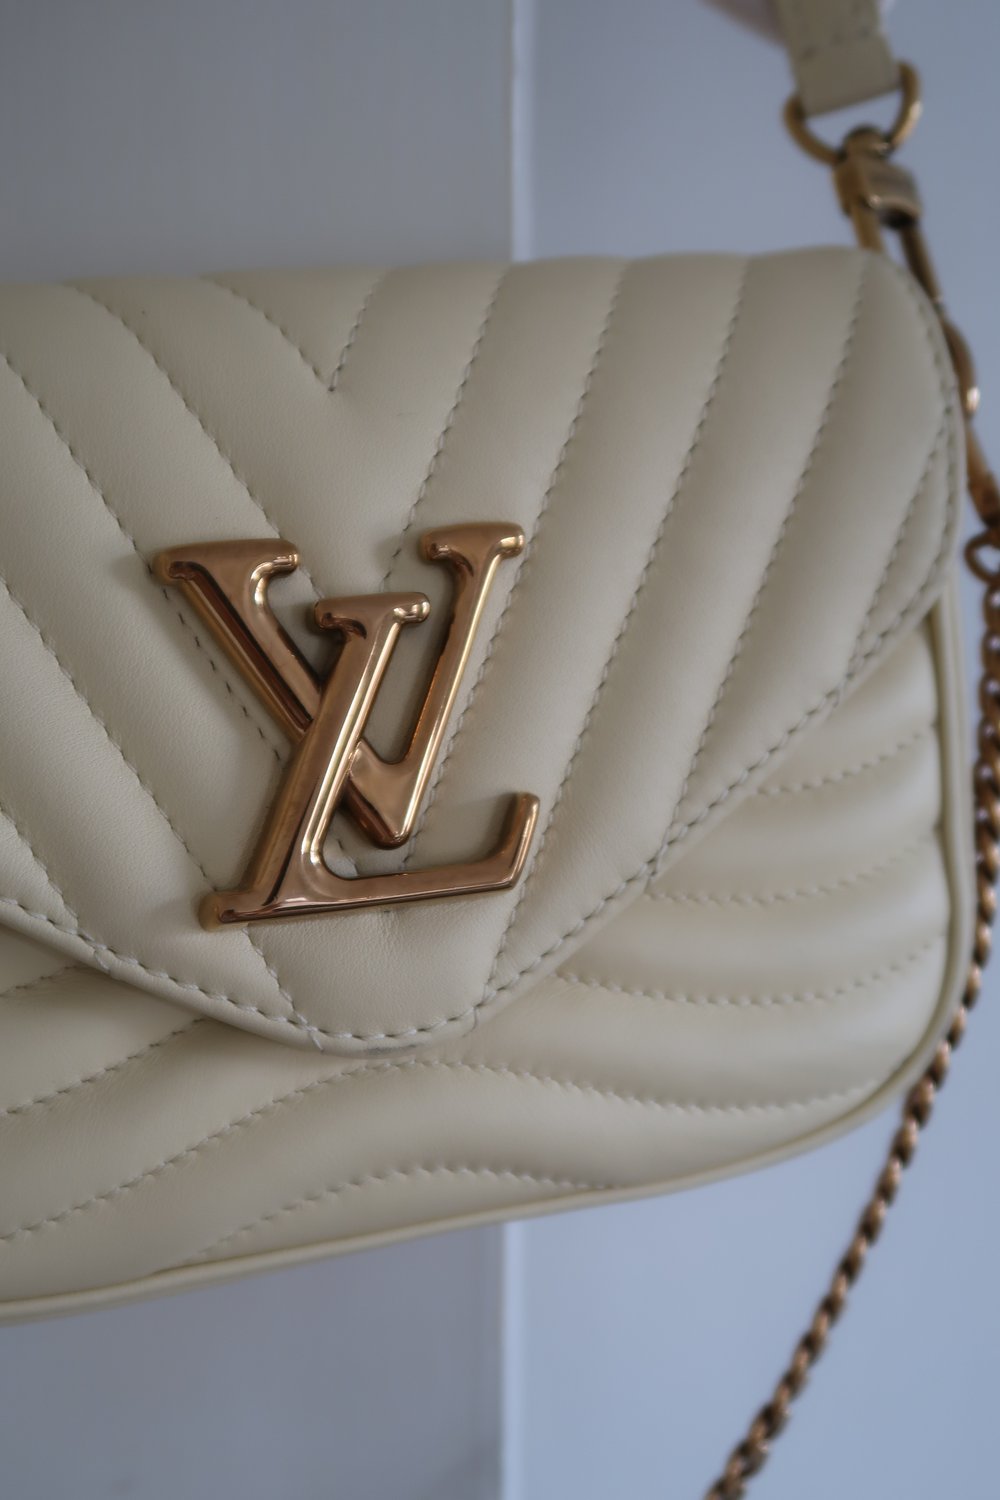 Louis Vuitton New Wave Multi-Pochette M56466-black  Bags, Black louis  vuitton bag, Louis vuitton handbags black